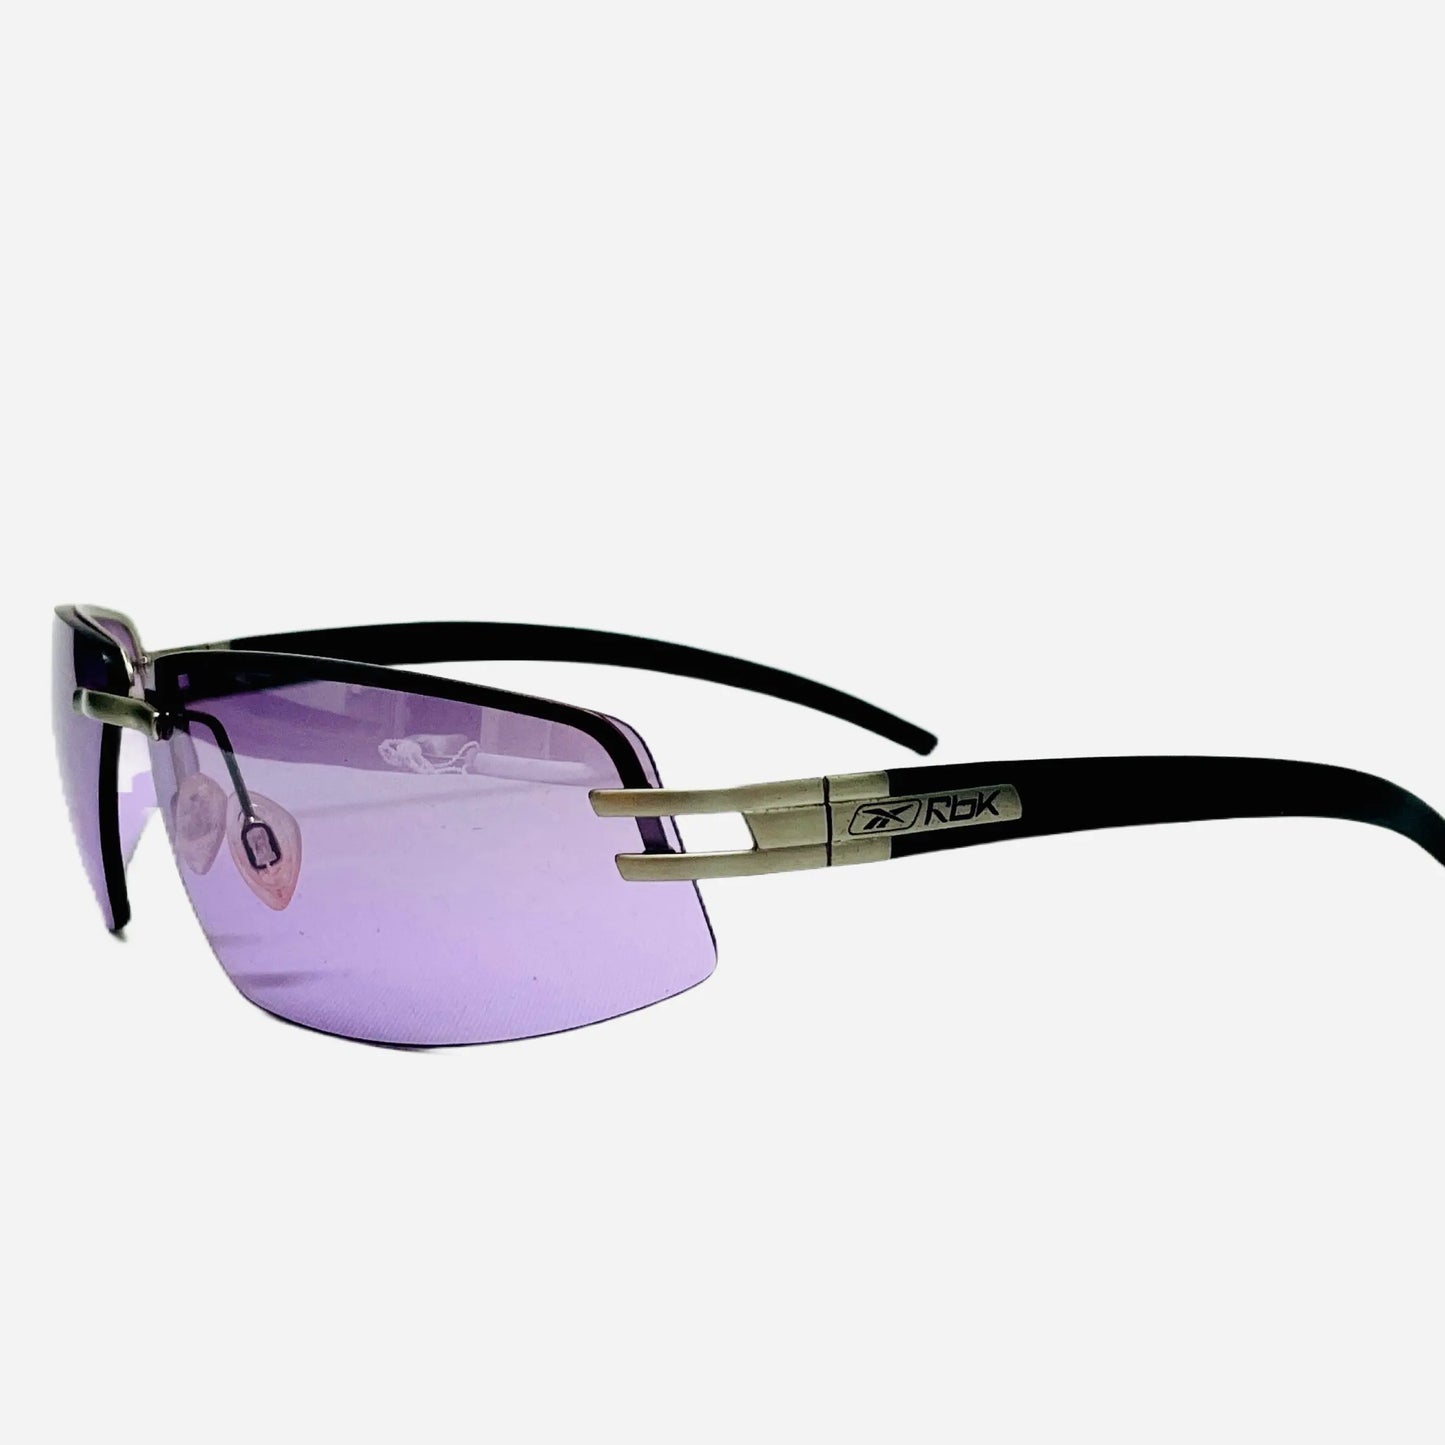 Vintage-Rebook-Sonnenbrille-Sunglasses-Schnelle-Brille-90s-Side